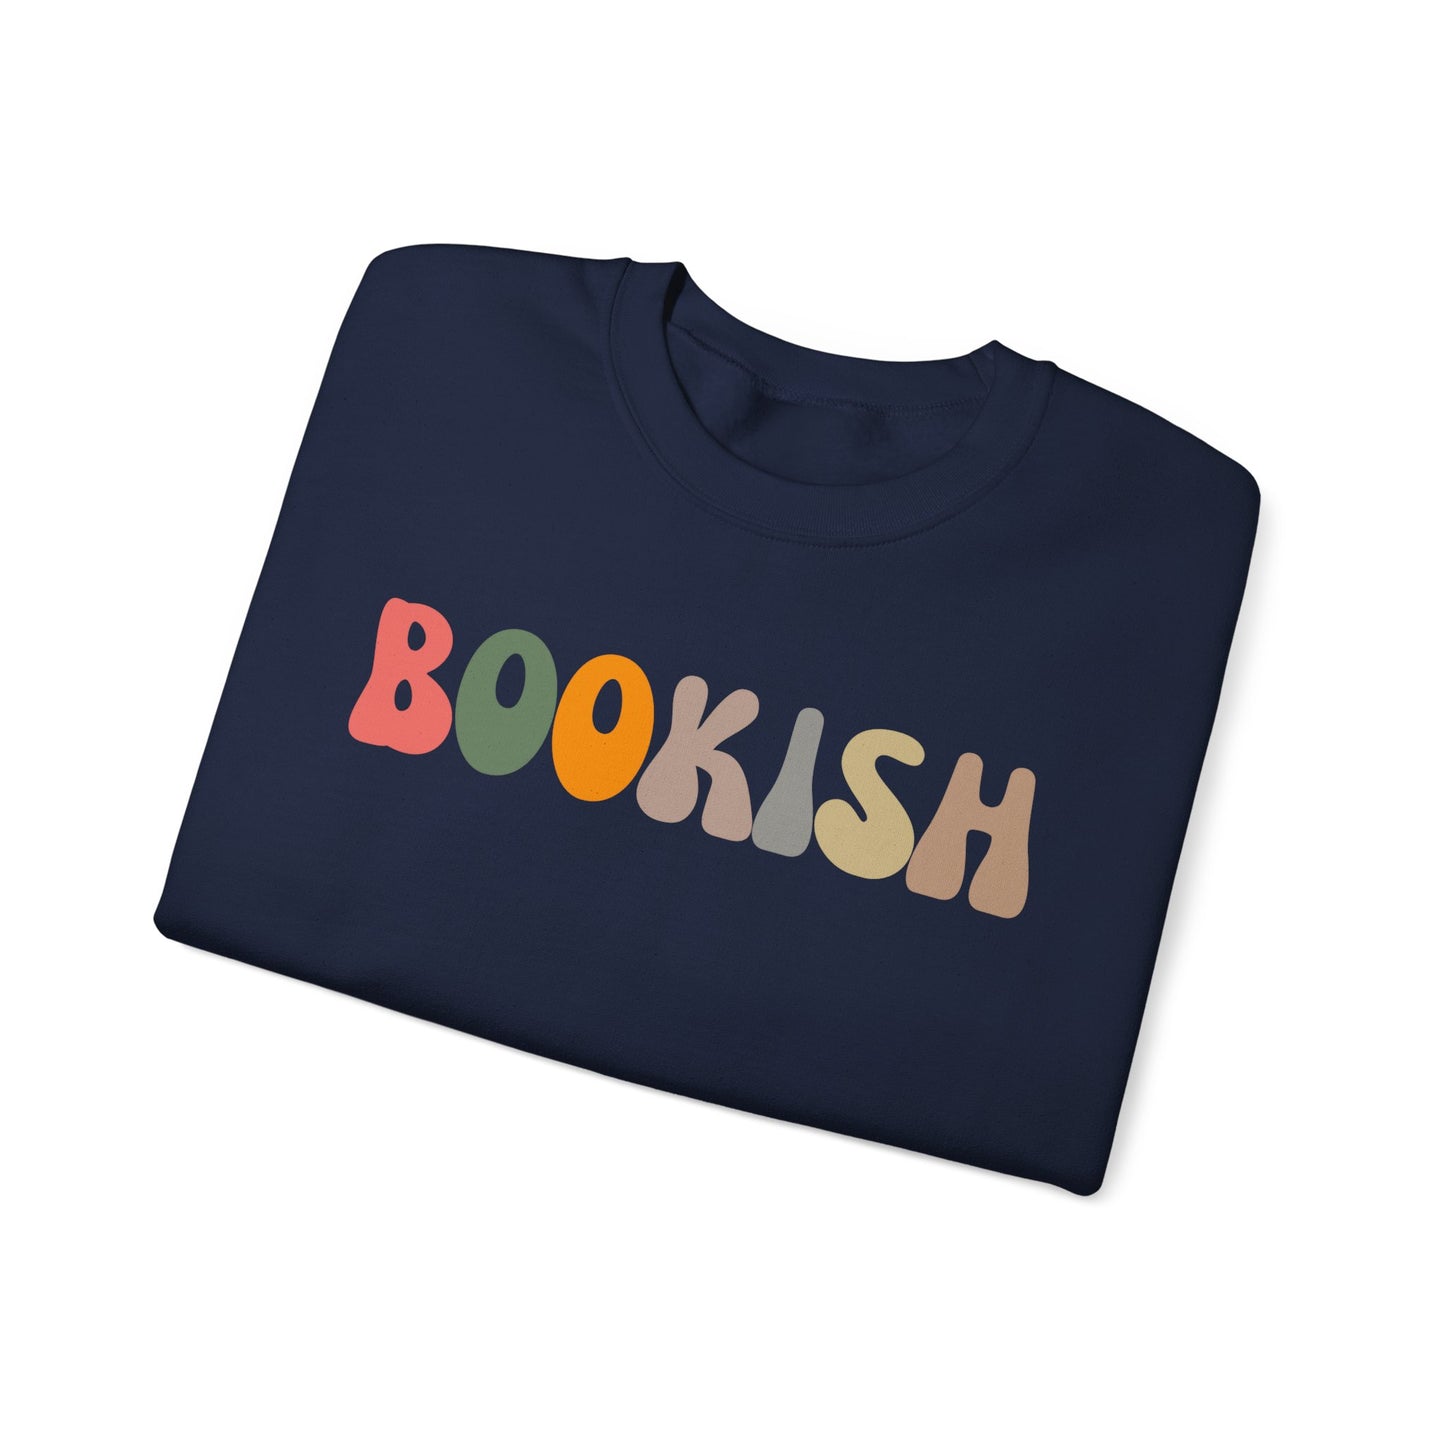 Bookish Sweatshirt, Book Lovers Club Sweatshirt, Bookworm Era Sweatshirt, Book Nerd Sweatshirt, Book Club Sweatshirt, Gift for Friend, S1315